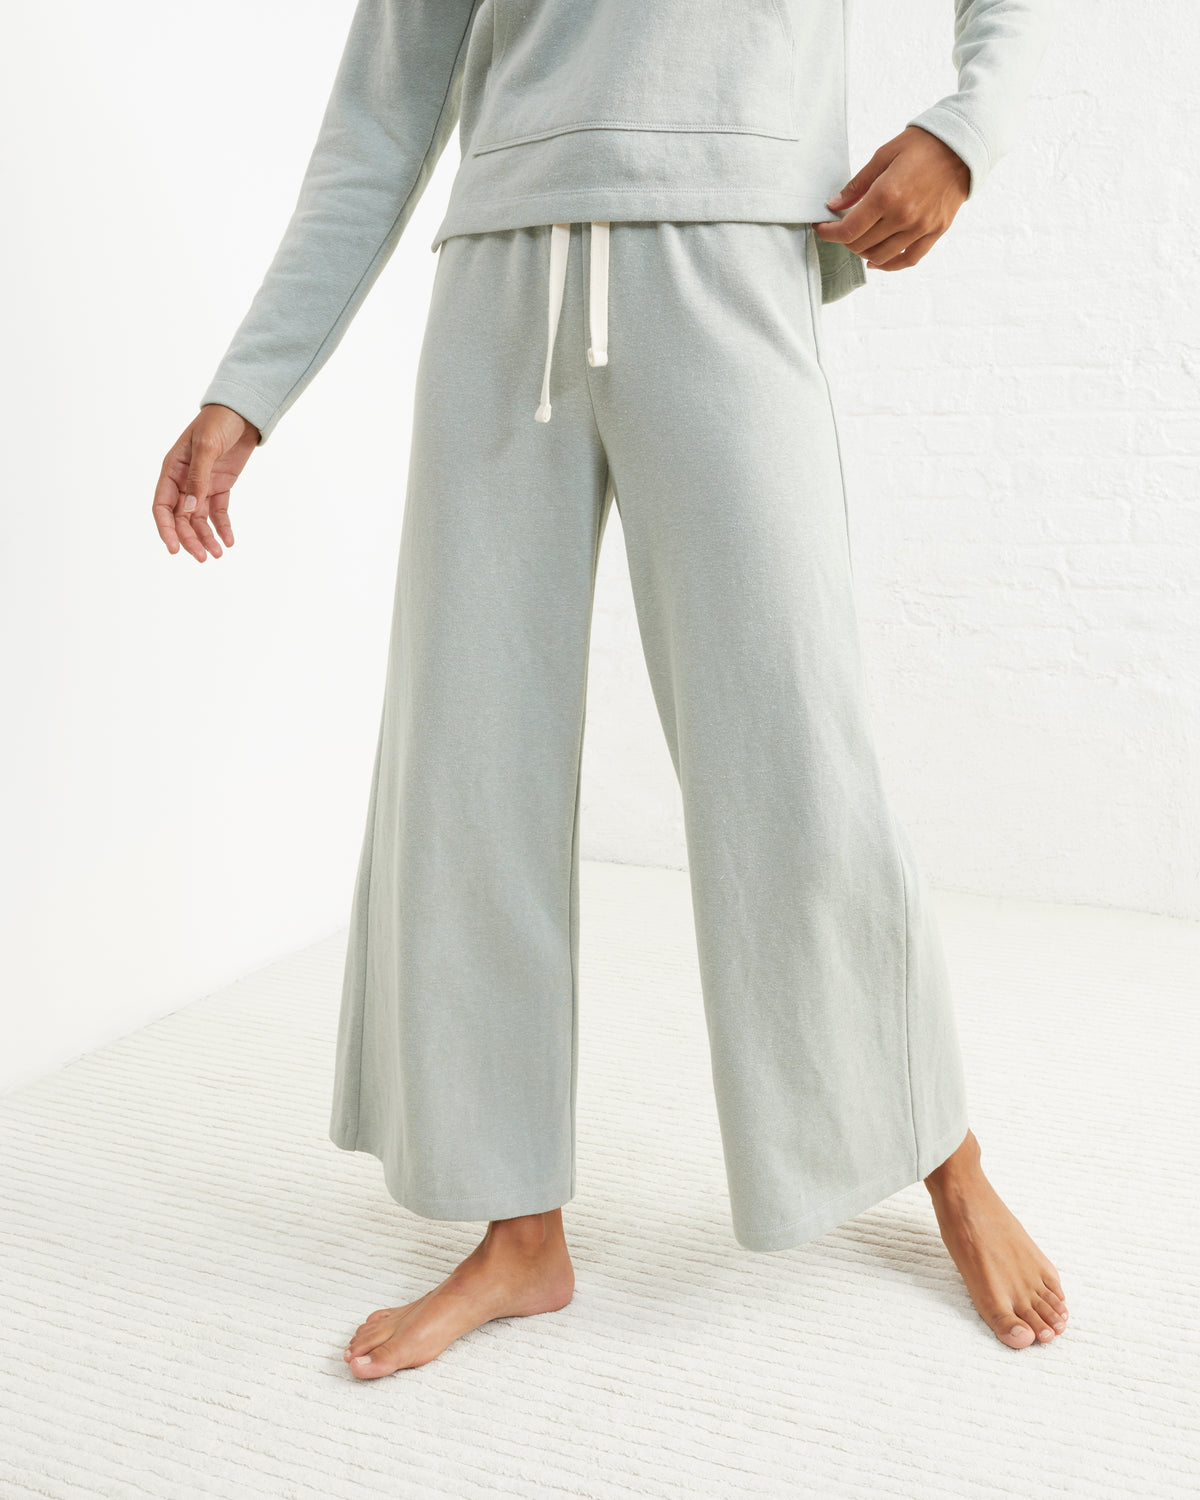 90s puritan pajama pants  Knot Co Ltd